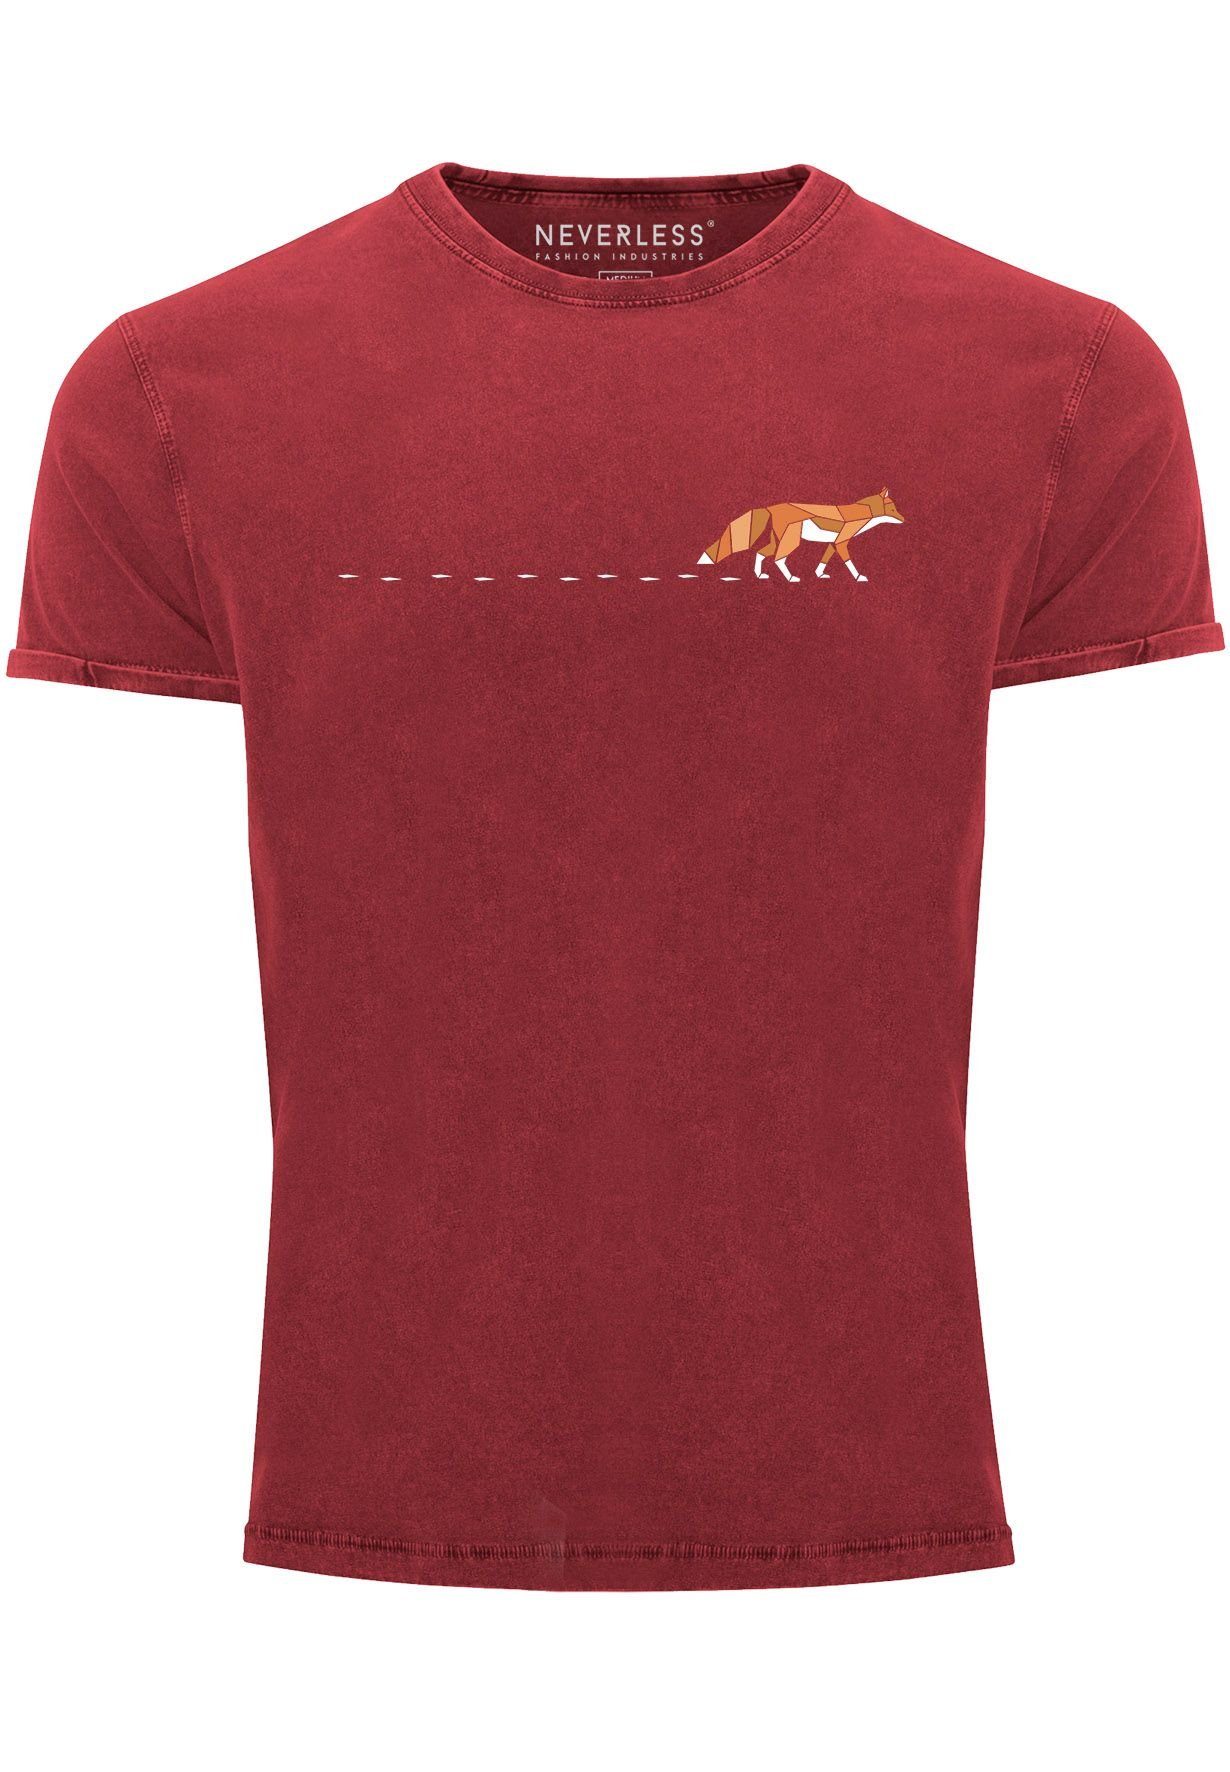 Neverless Print-Shirt Herren T-Shirt Vintage Fuchs Fox Wald Tiermotiv Logo Print Badge Fashi mit Print rot